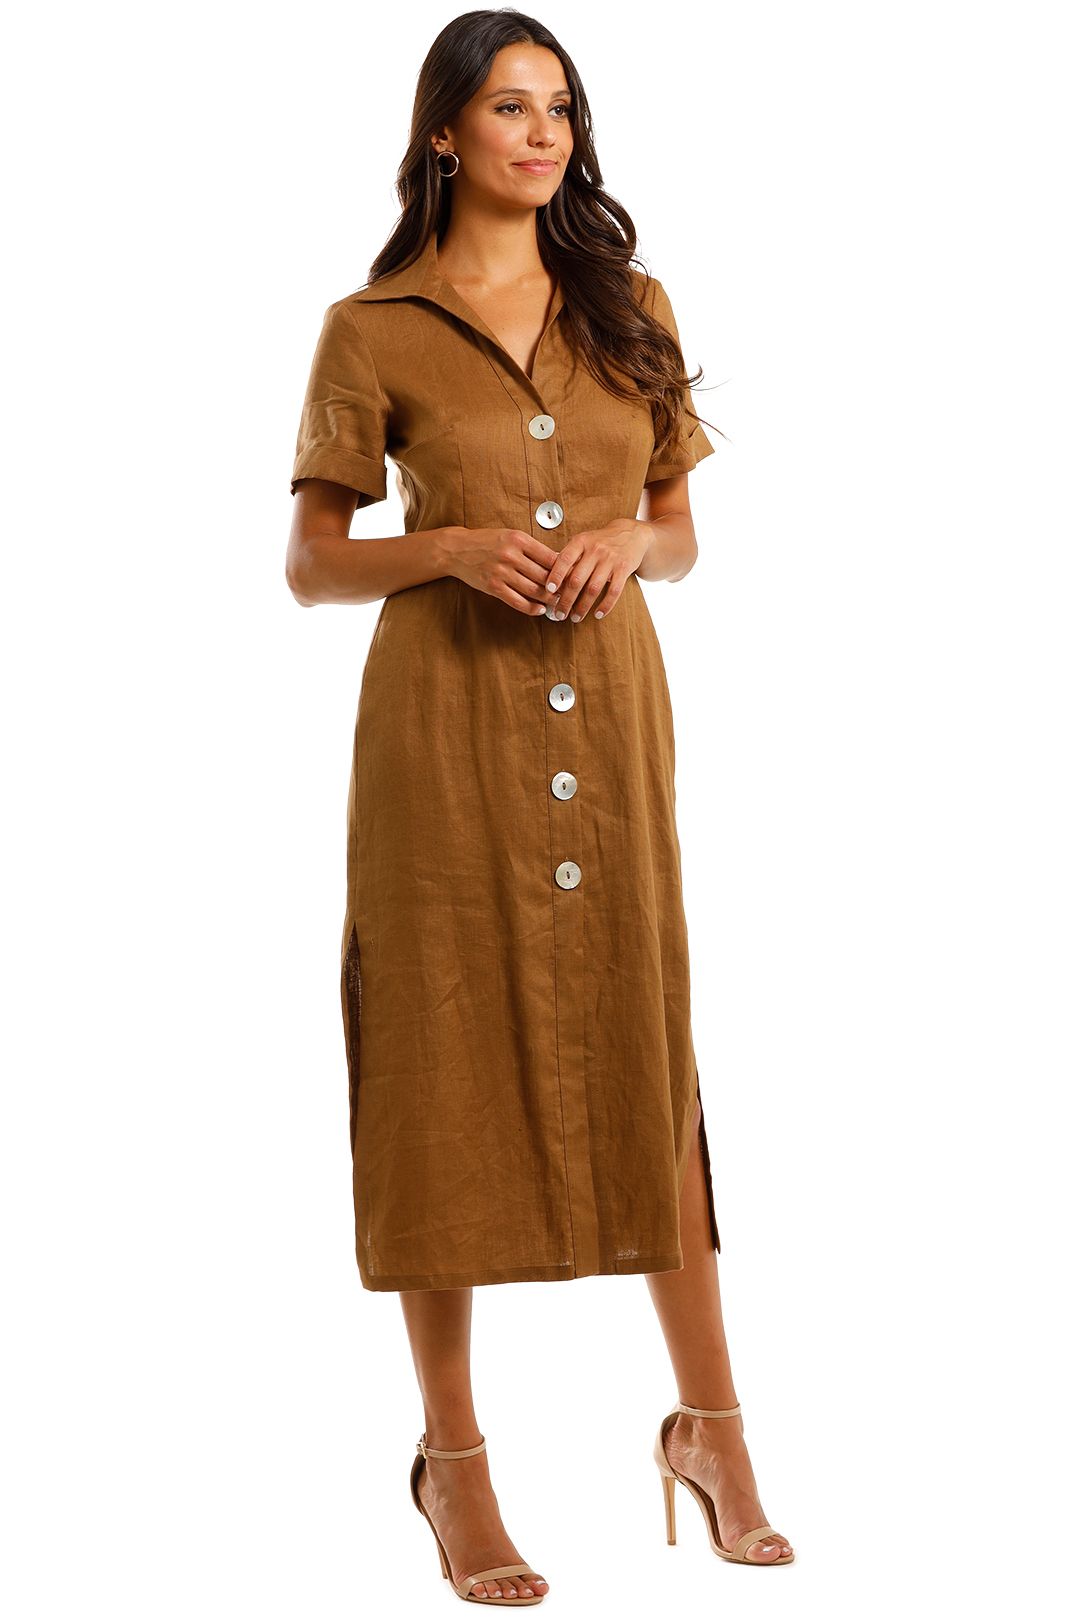 Jillian Boustred Safari Dress Coffee Brown Midi Dress